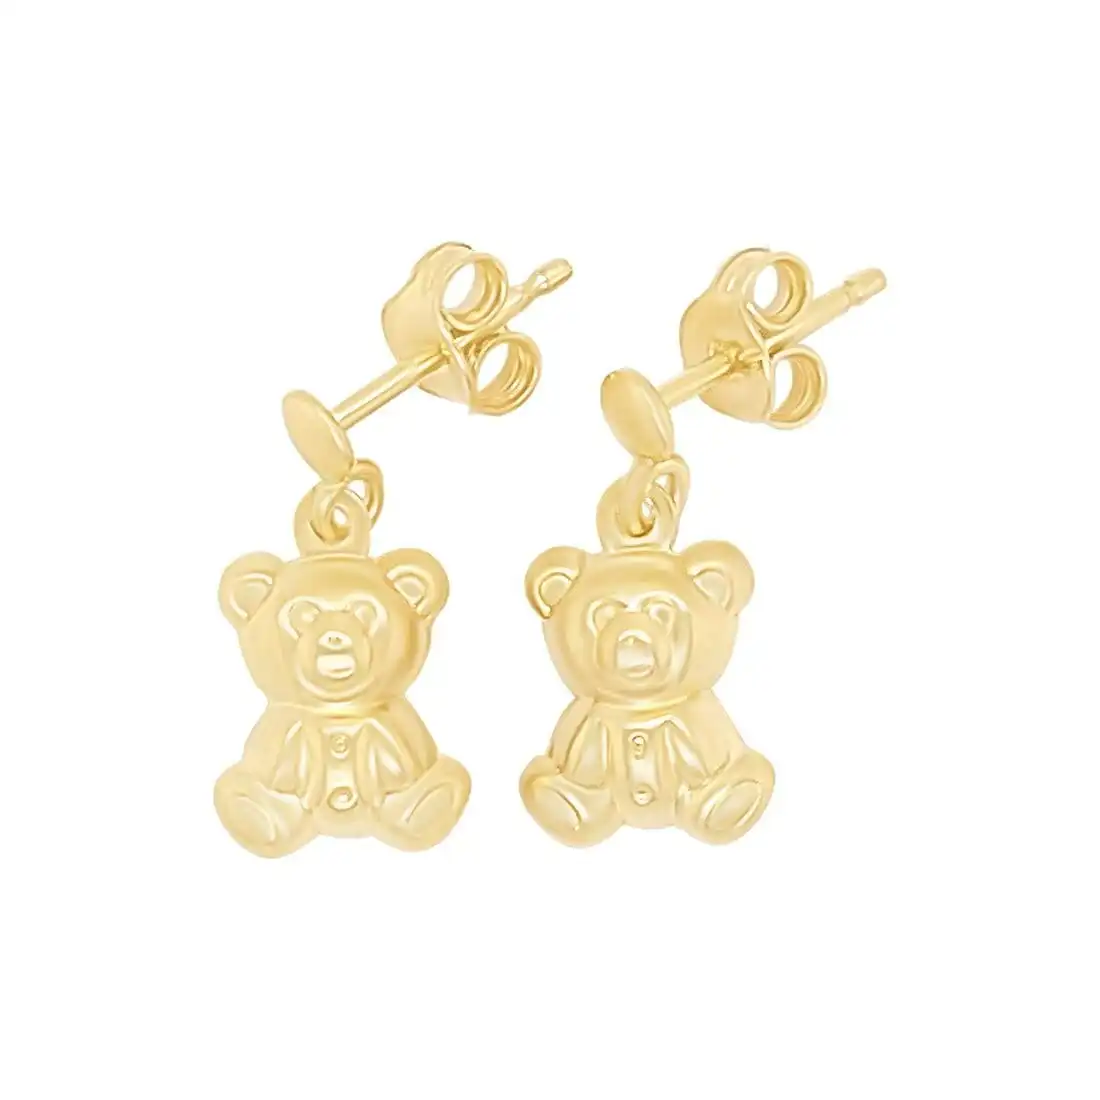 Children's Teddy Bear Drop Earrings in 9ct Yellow Gold Silver Infused